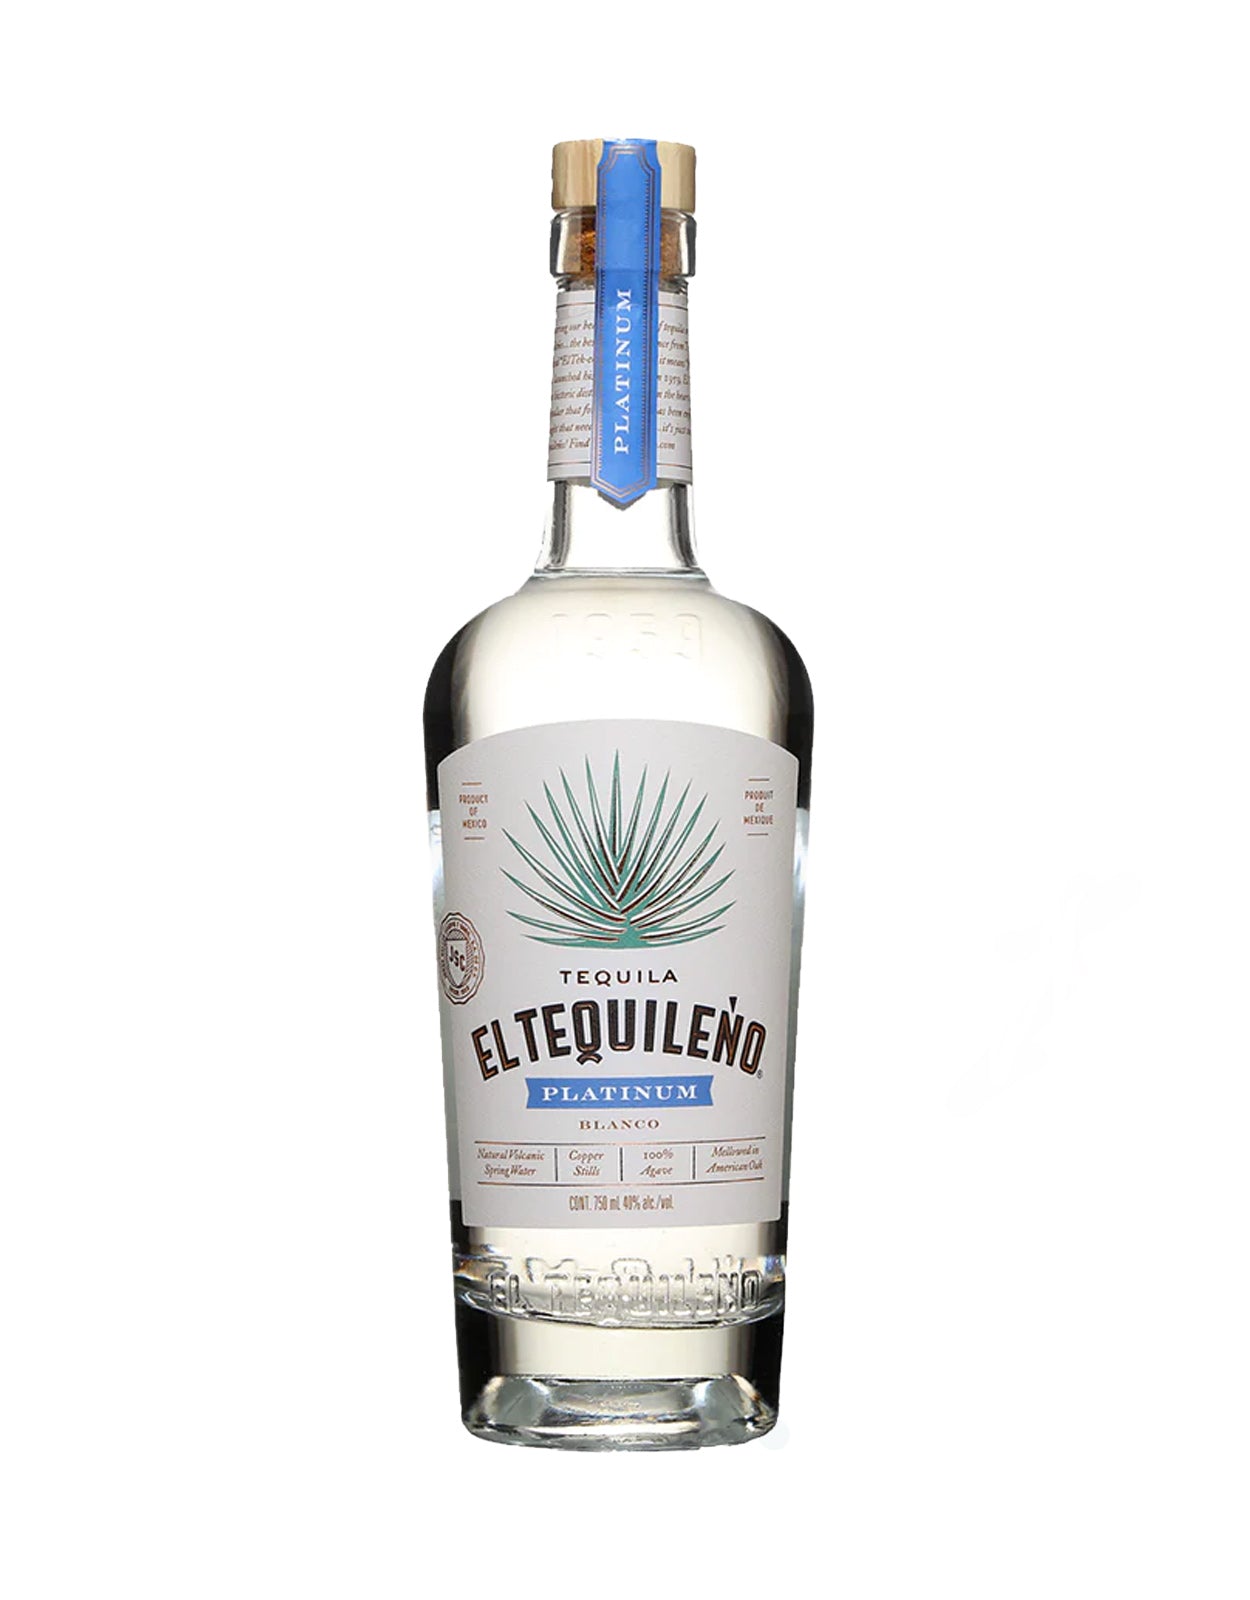 El Tequileno Blanco Platinum Tequila